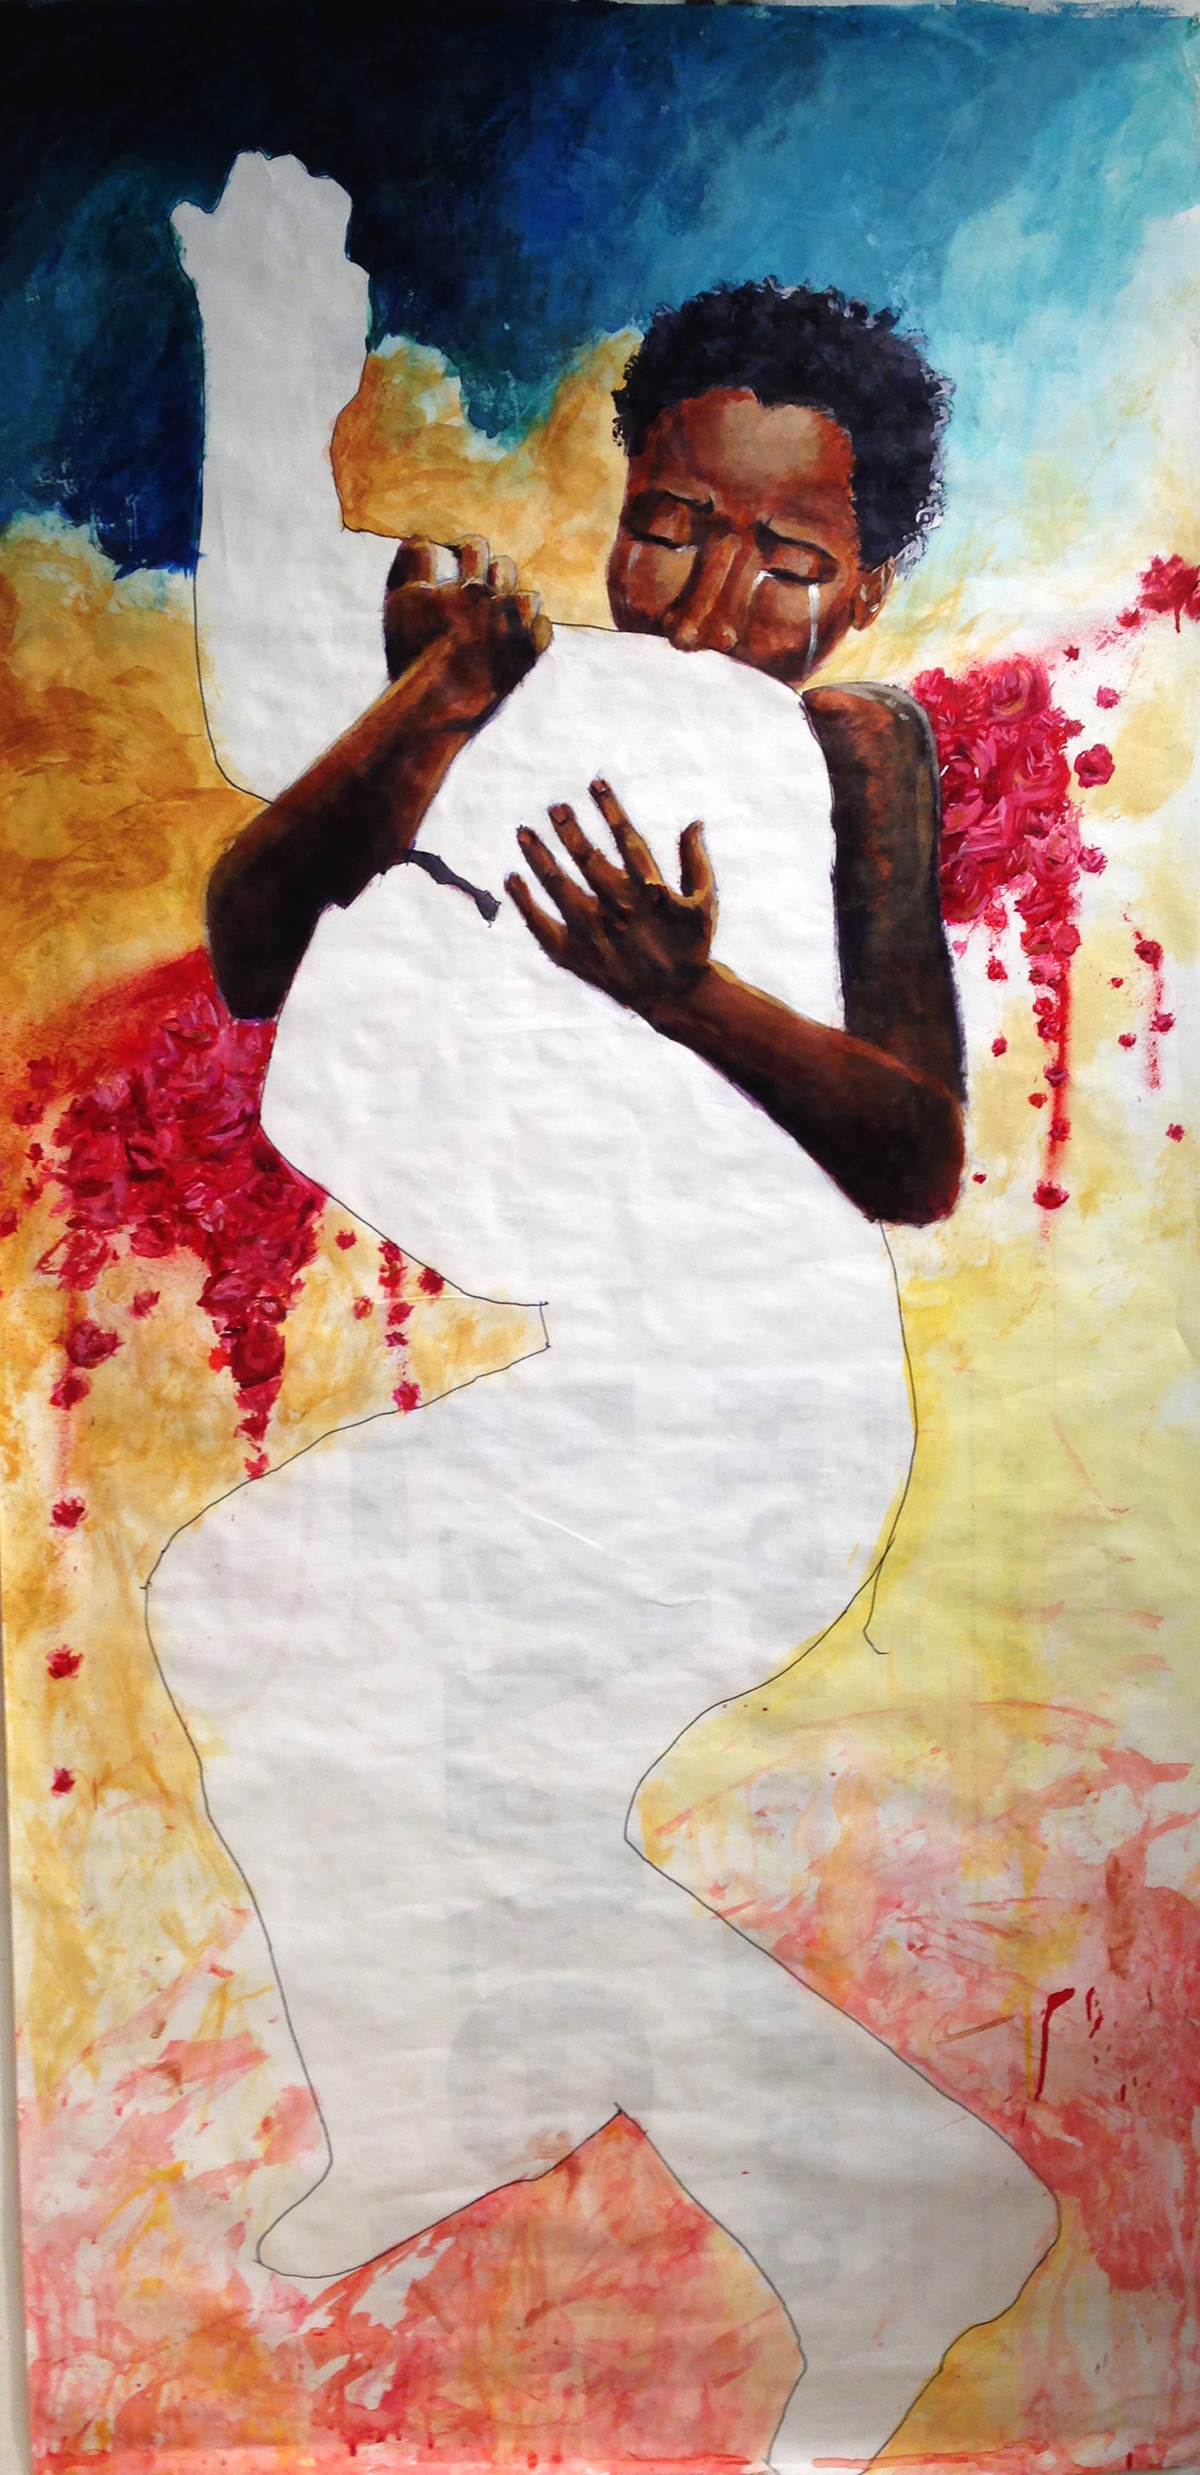 risd ferguson Social Justice Black Lives Matter mother death blood Silhouette die in protest